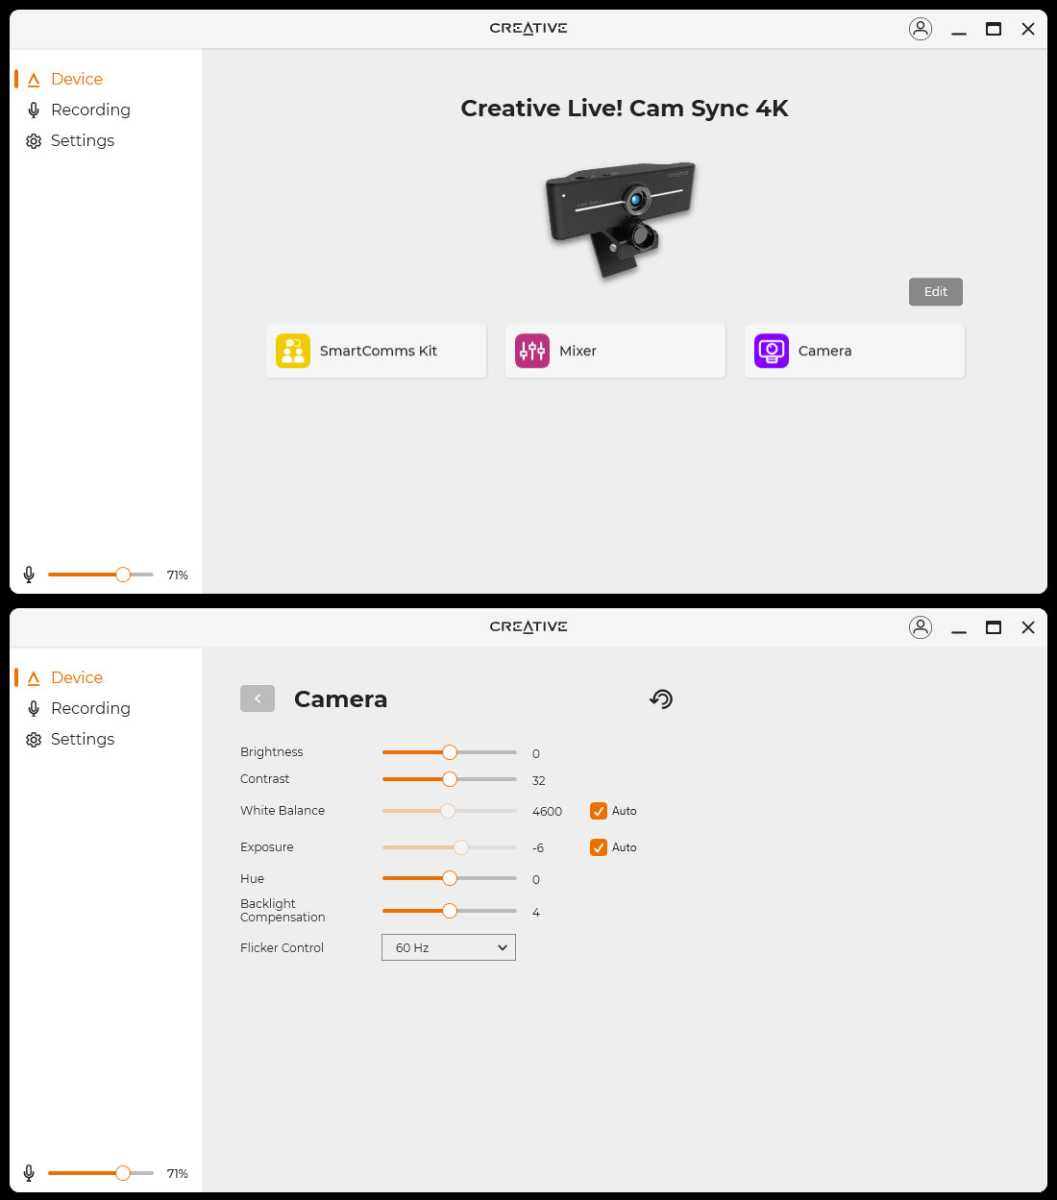 Creative Live Cam Sync 4K, Creative App